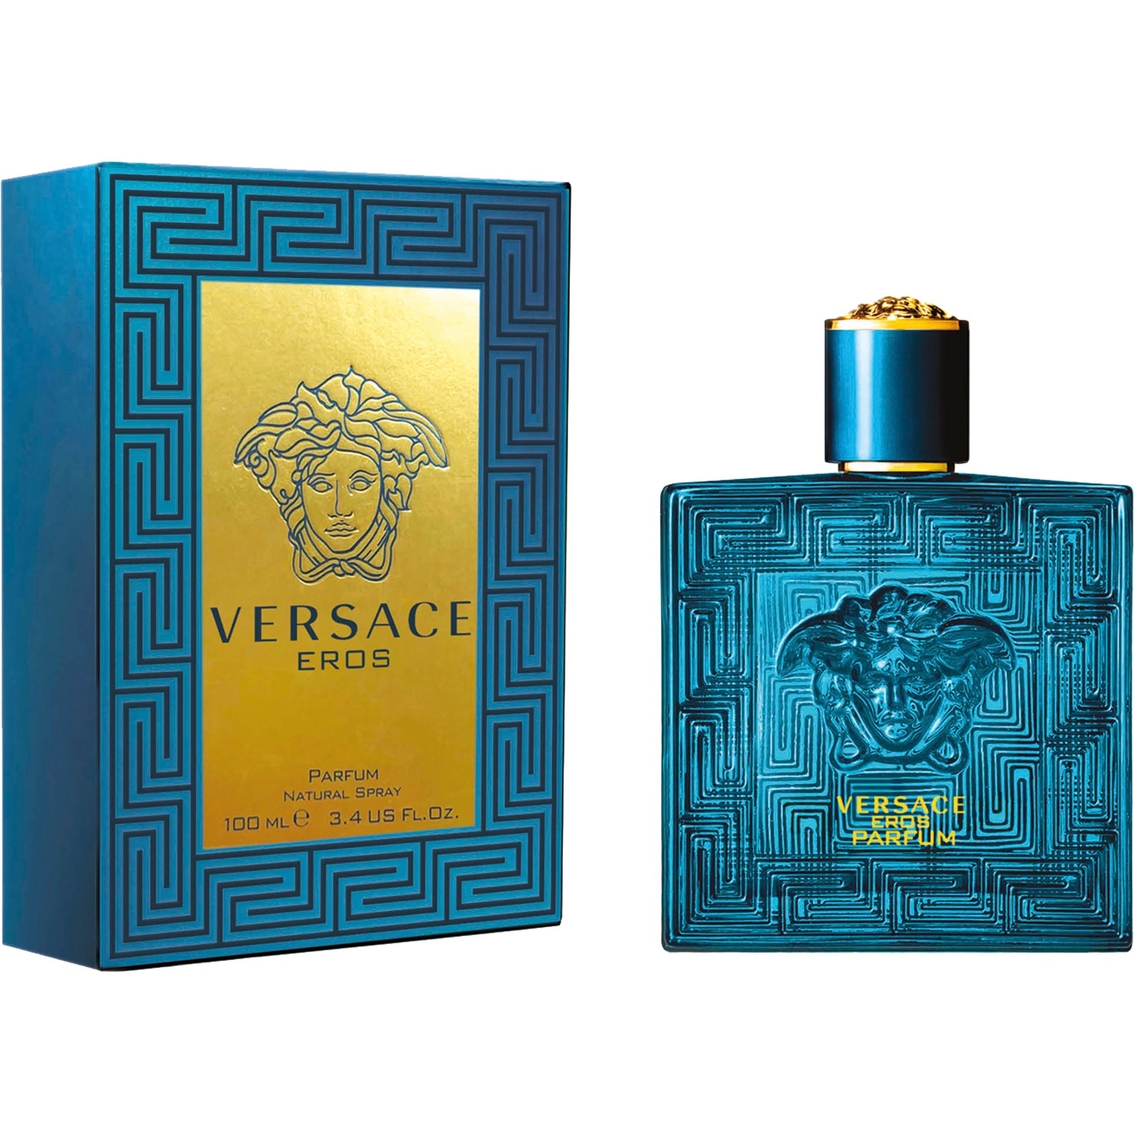 Versace Eros 3.4oz Parfum Spray - Image 2 of 2